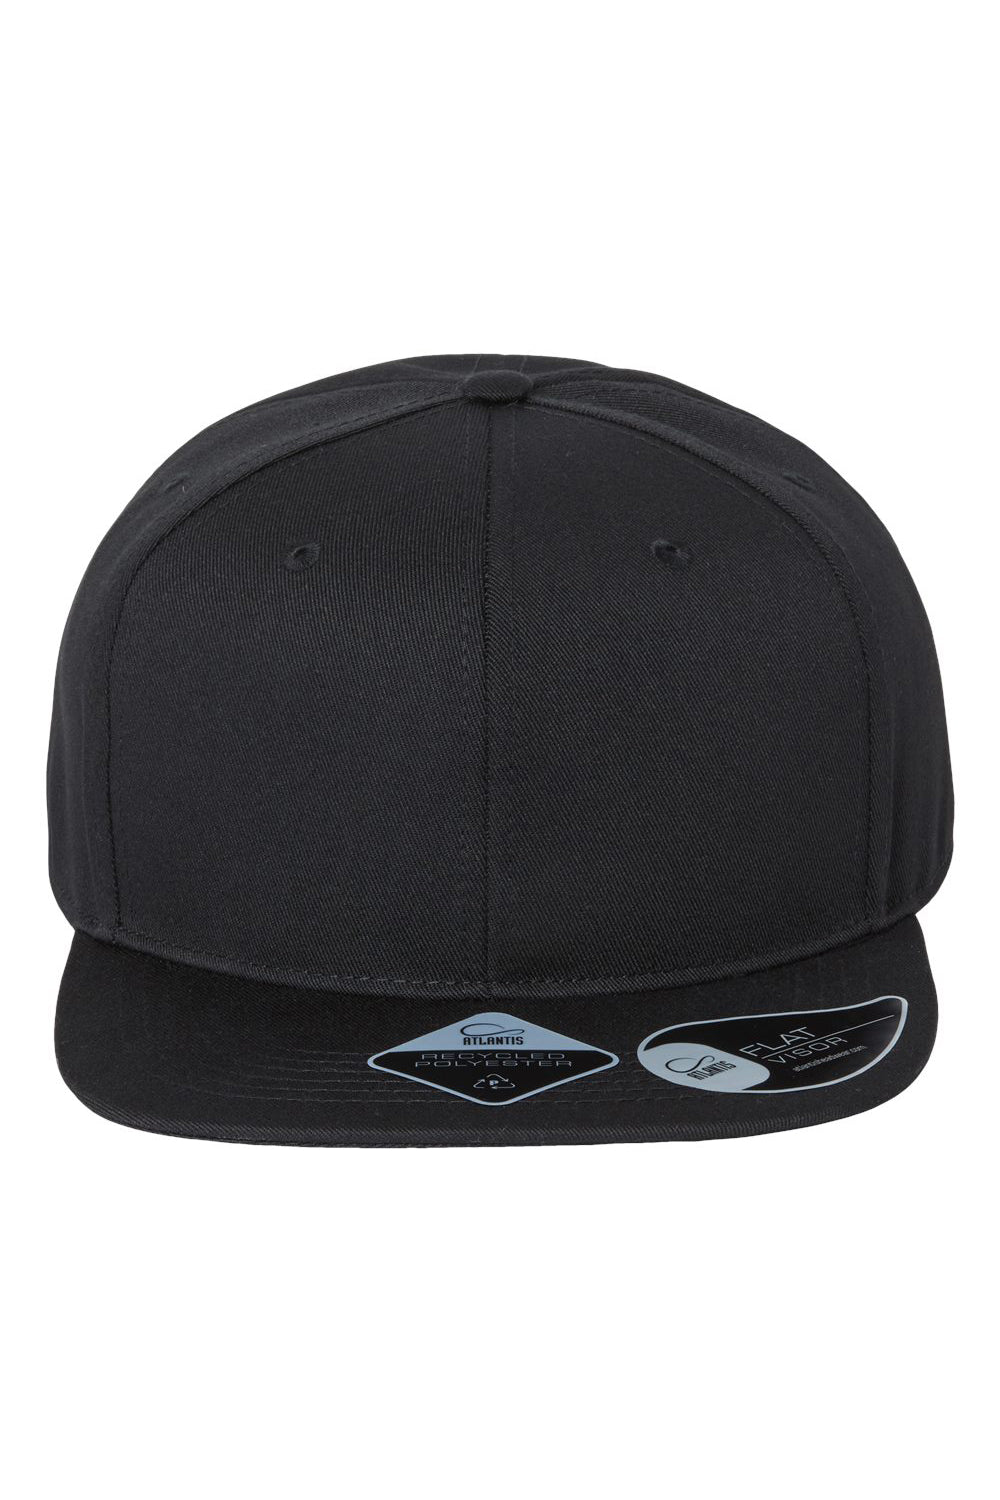 Atlantis Headwear JAMES Mens Sustainable Flat Bill Snapback Hat Black Flat Front